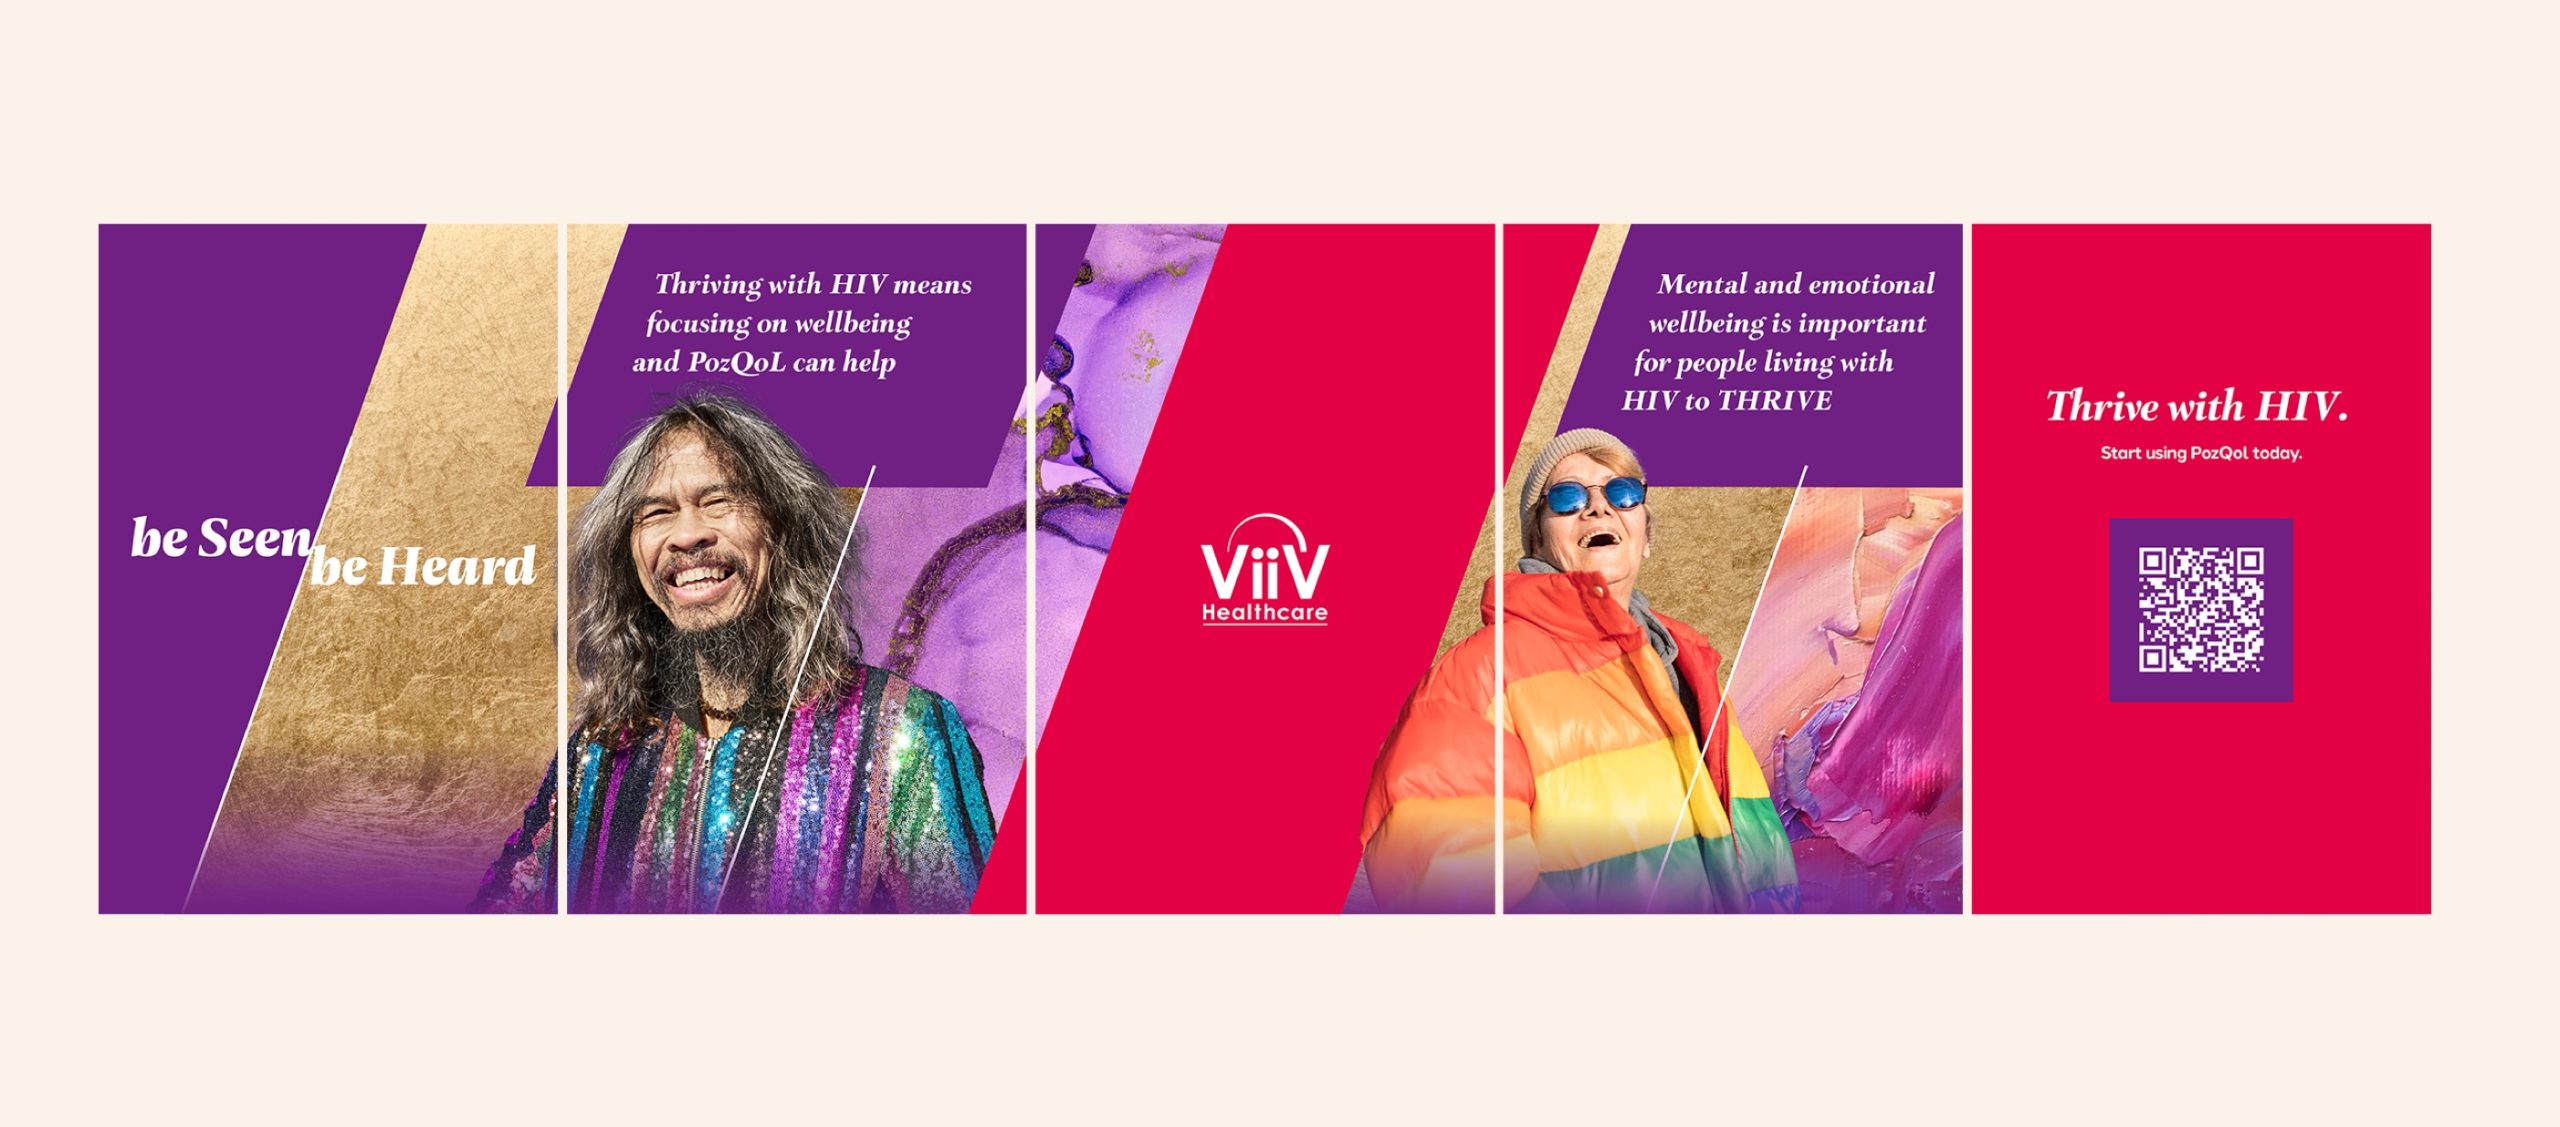 ViiV social media post for HIV awareness